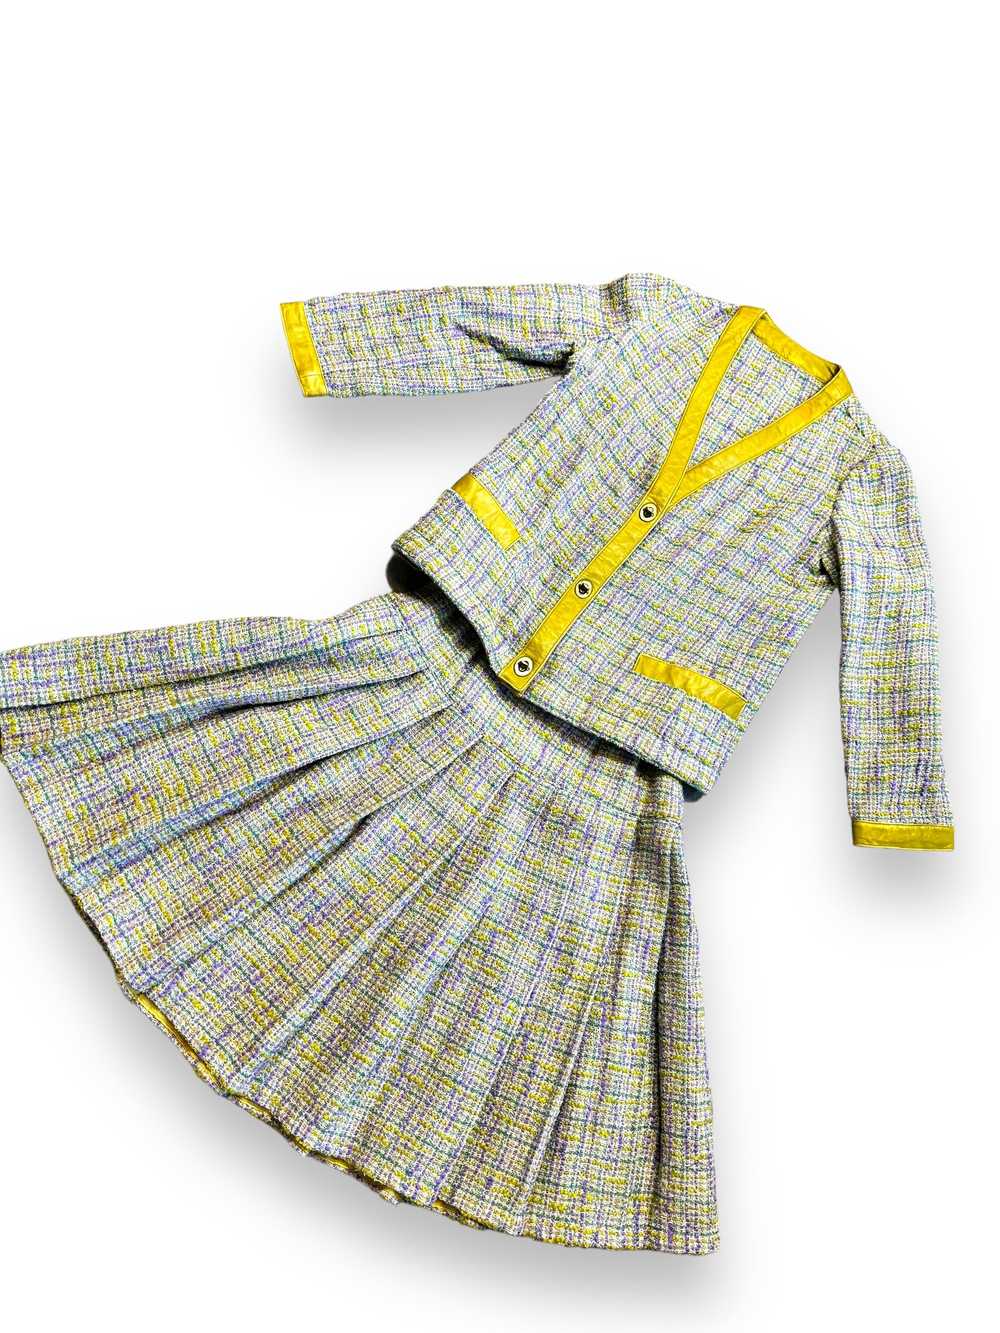 Vintage Bonnie Cashin Sills Tweed 2 Piece Suit - image 2